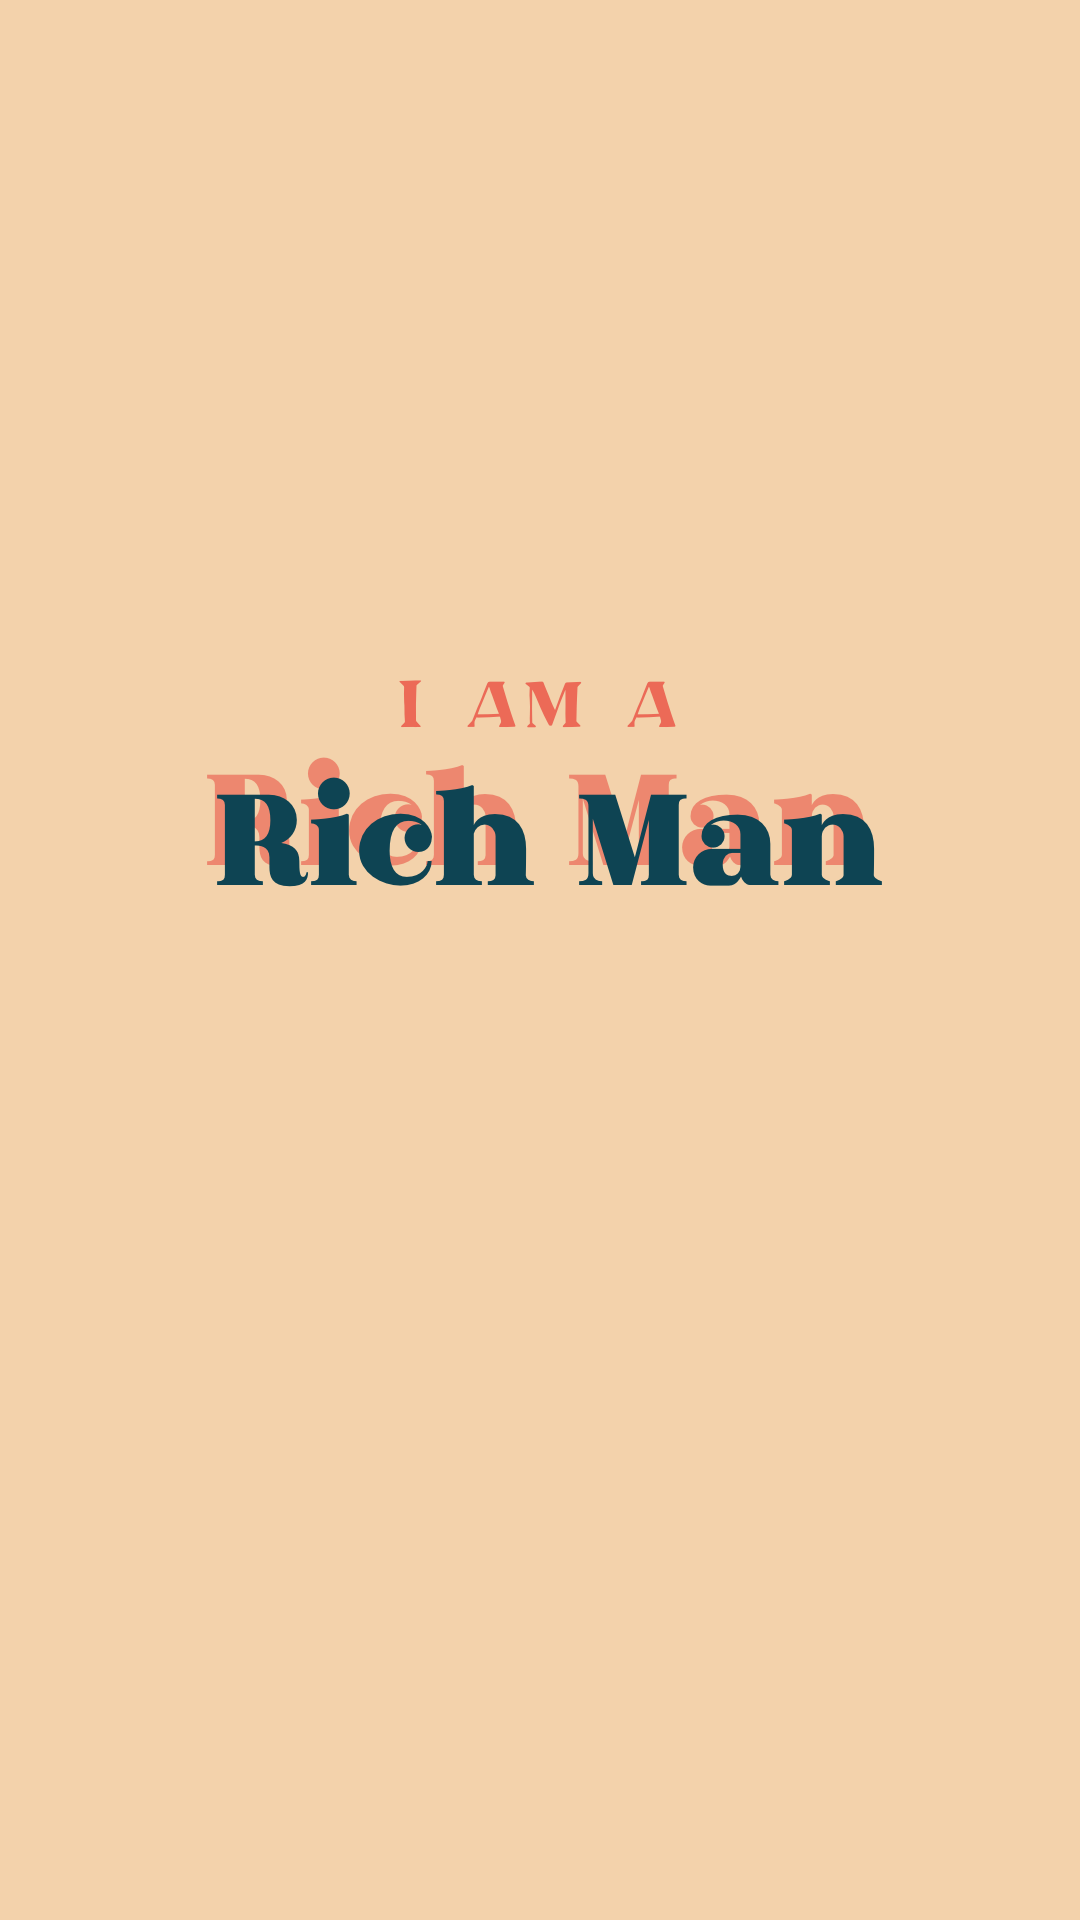 I Am A Rich Man Quote Wallpaper. Wallpaper quotes, Rich man, Cute wallpaper background